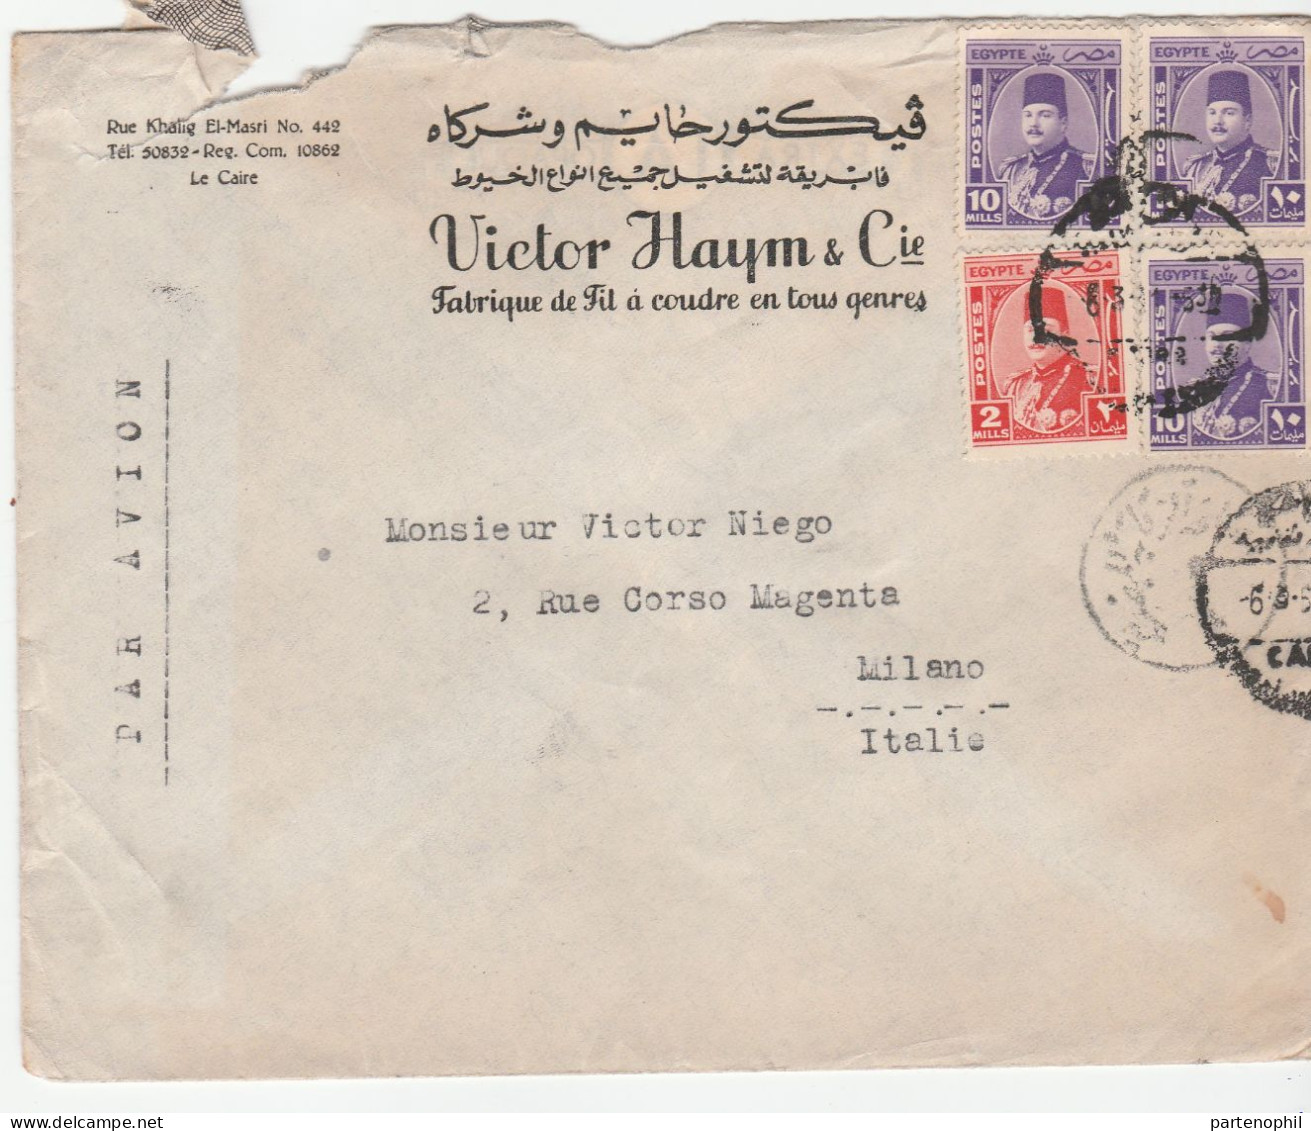 Egypte Aegypthen Egitto 1951  - Postal History  Postgeschichte - Storia Postale - Histoire Postale - Covers & Documents